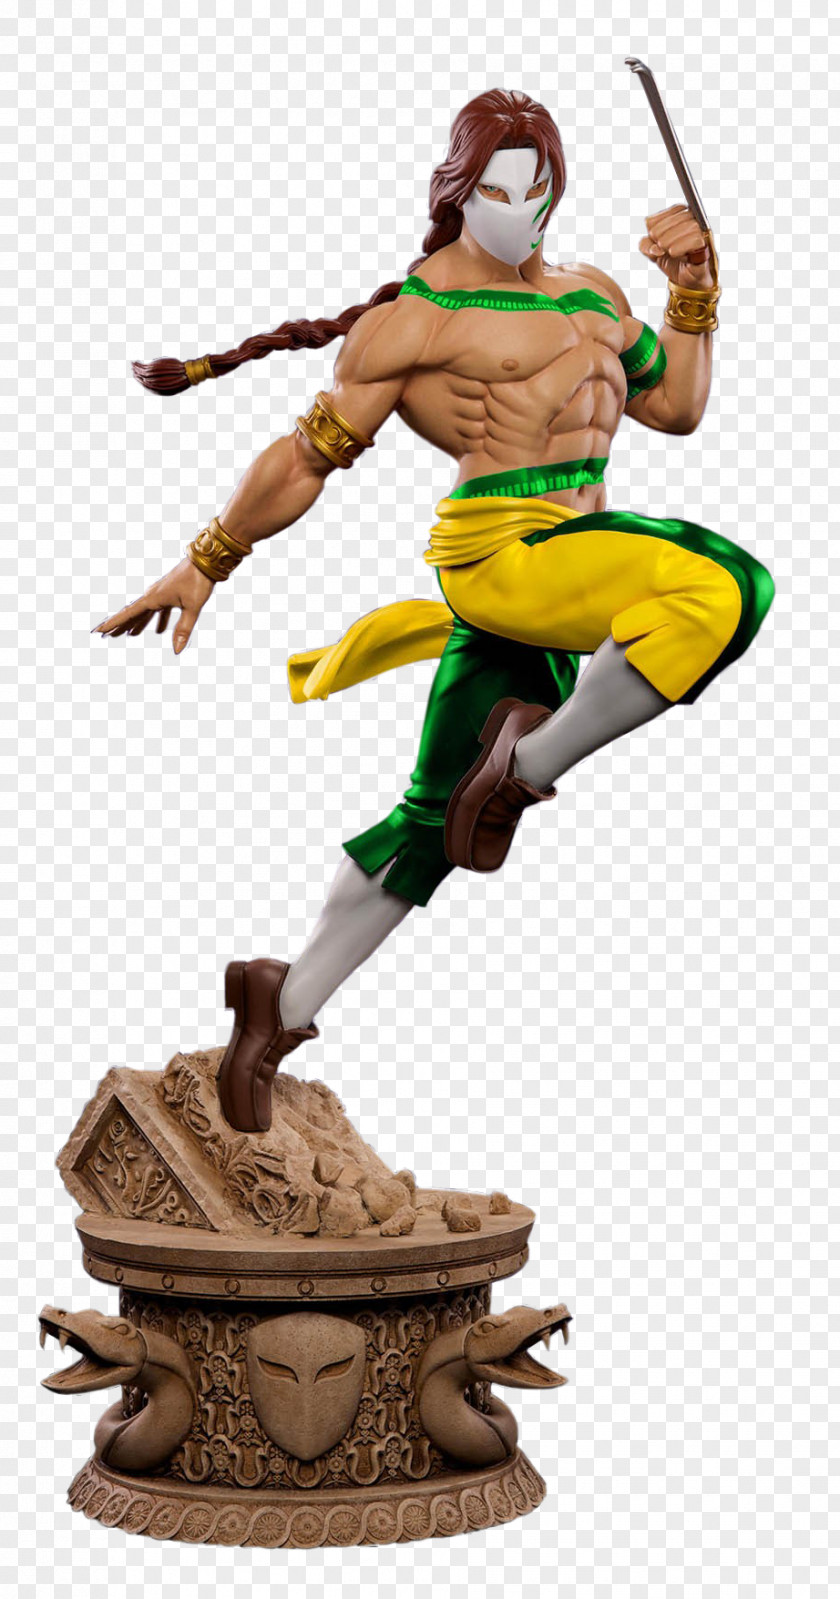 Liu Kang Vega Ultra Street Fighter II: The Final Challengers Statue Chun-Li Figurine PNG